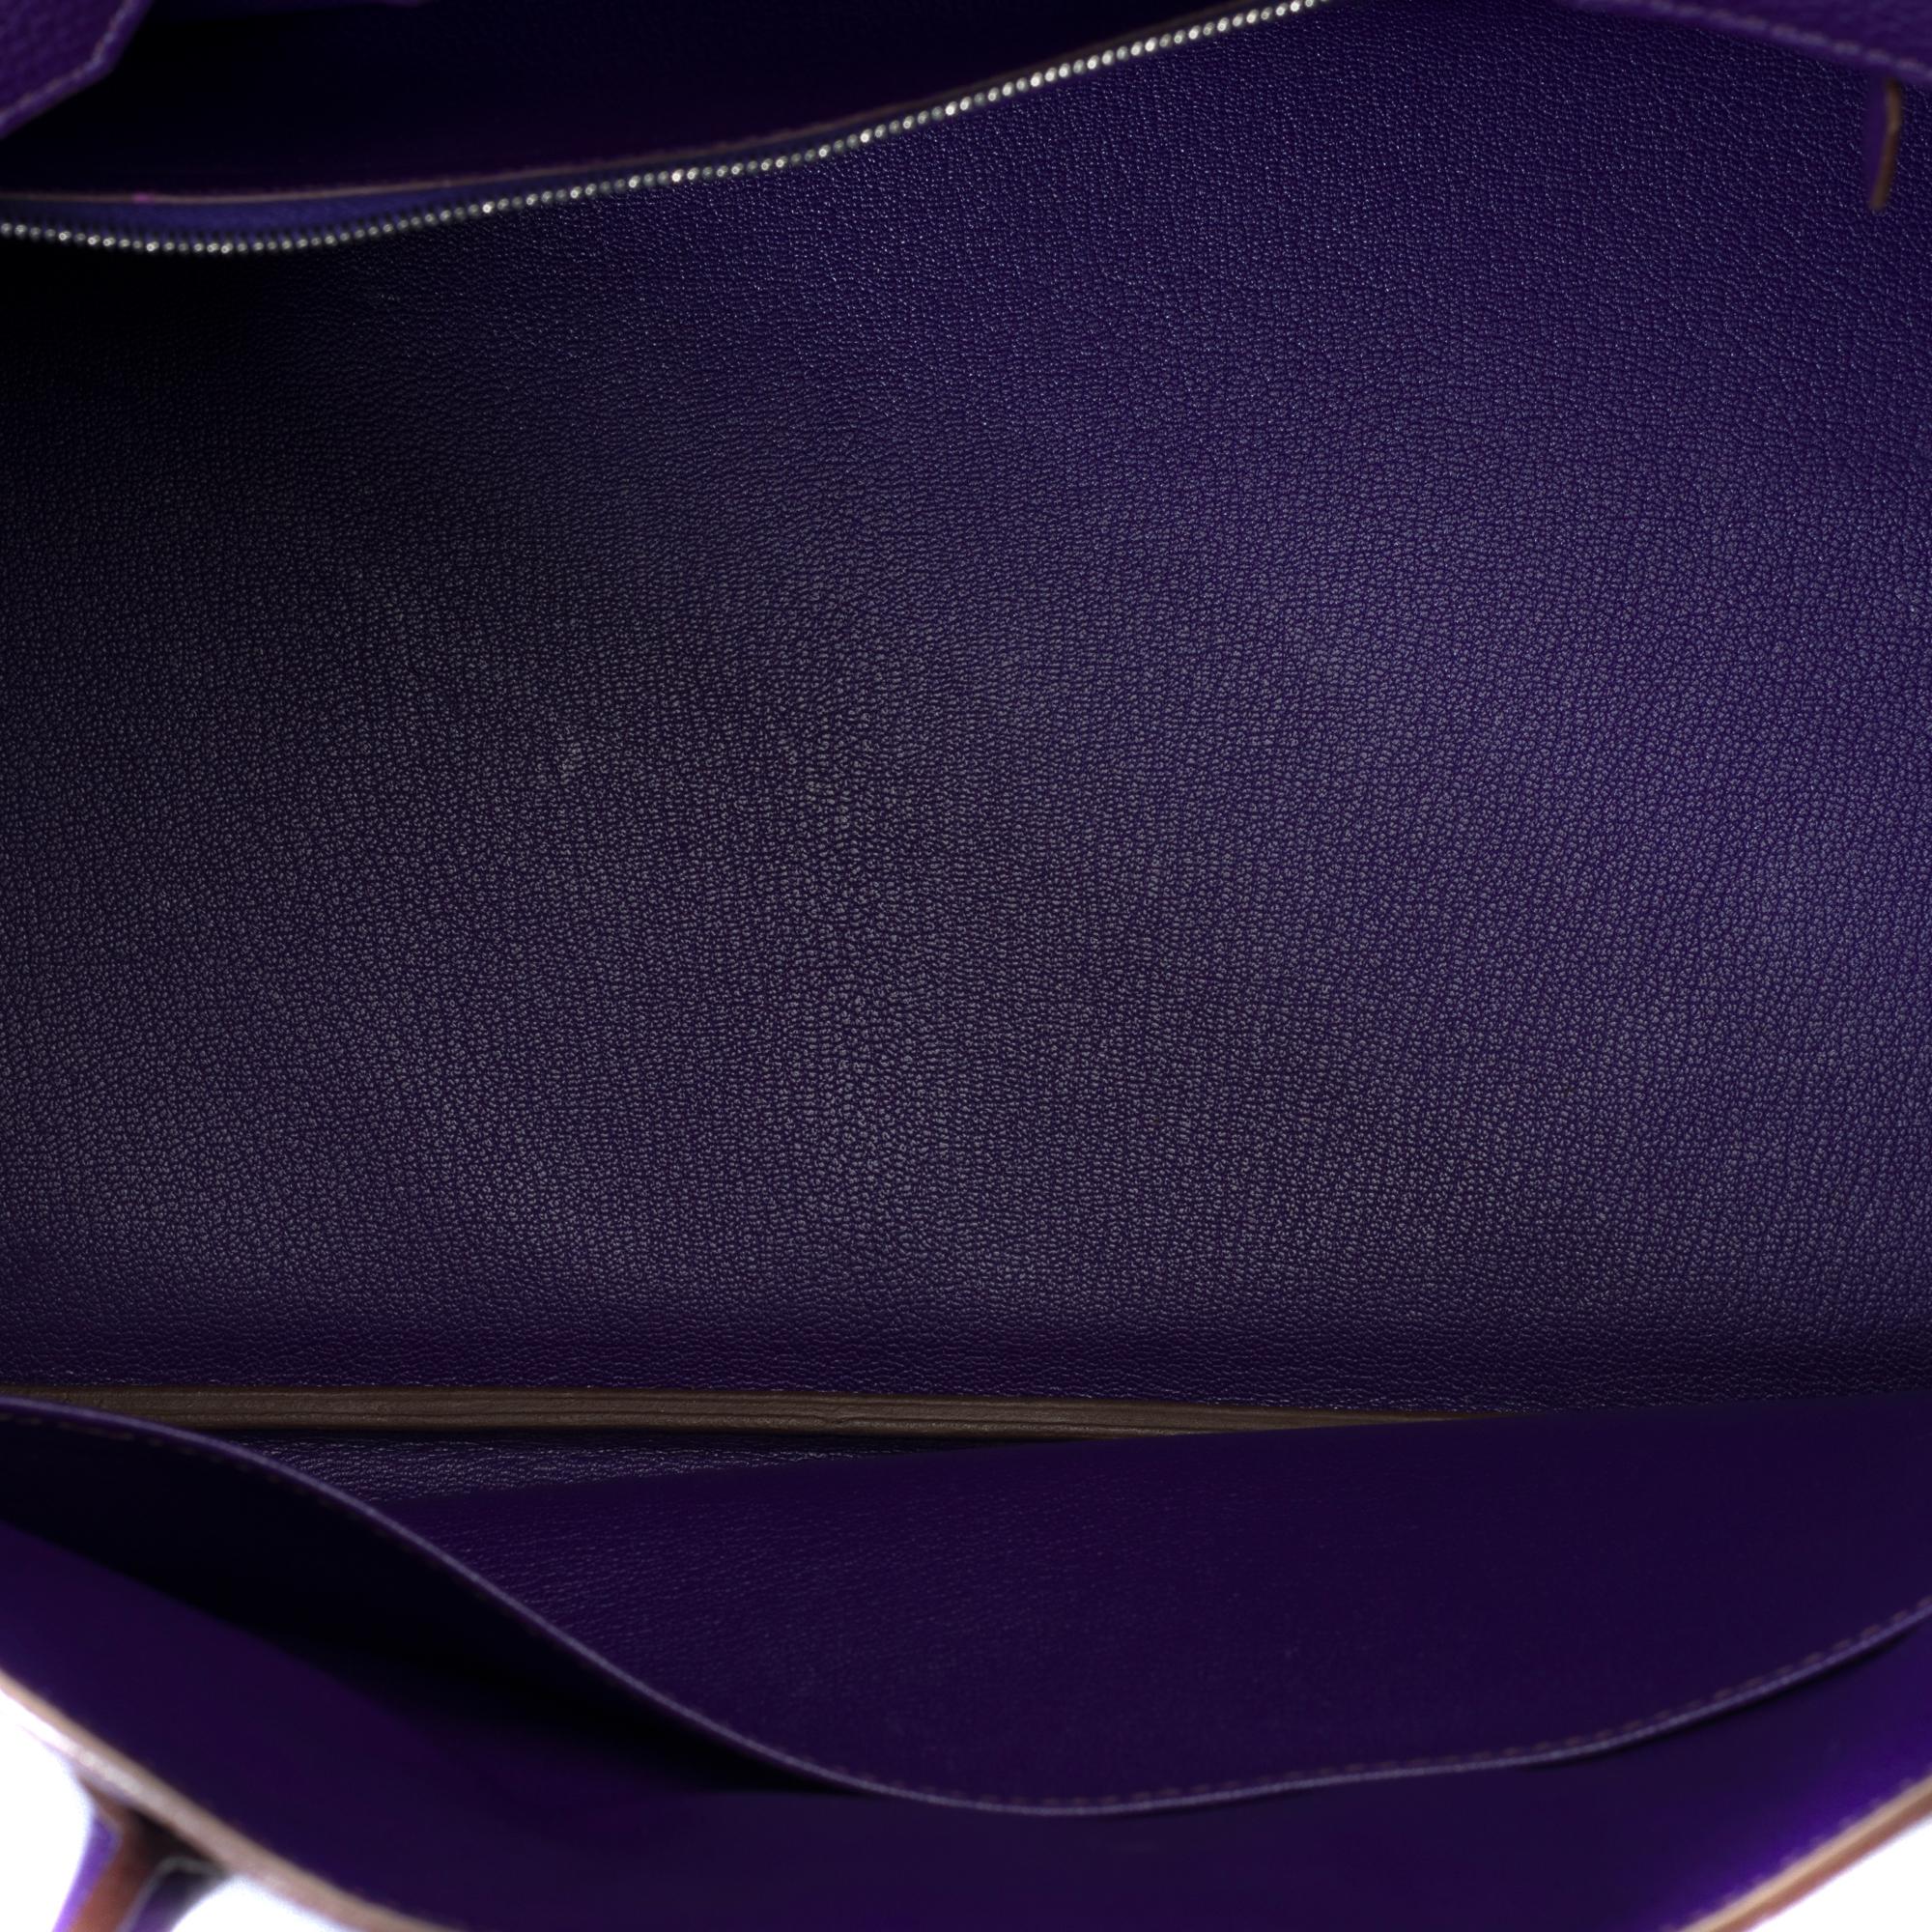 Classy & Rare Hermes Birkin 40 handbag in Iris Purple Togo leather, SHW 4